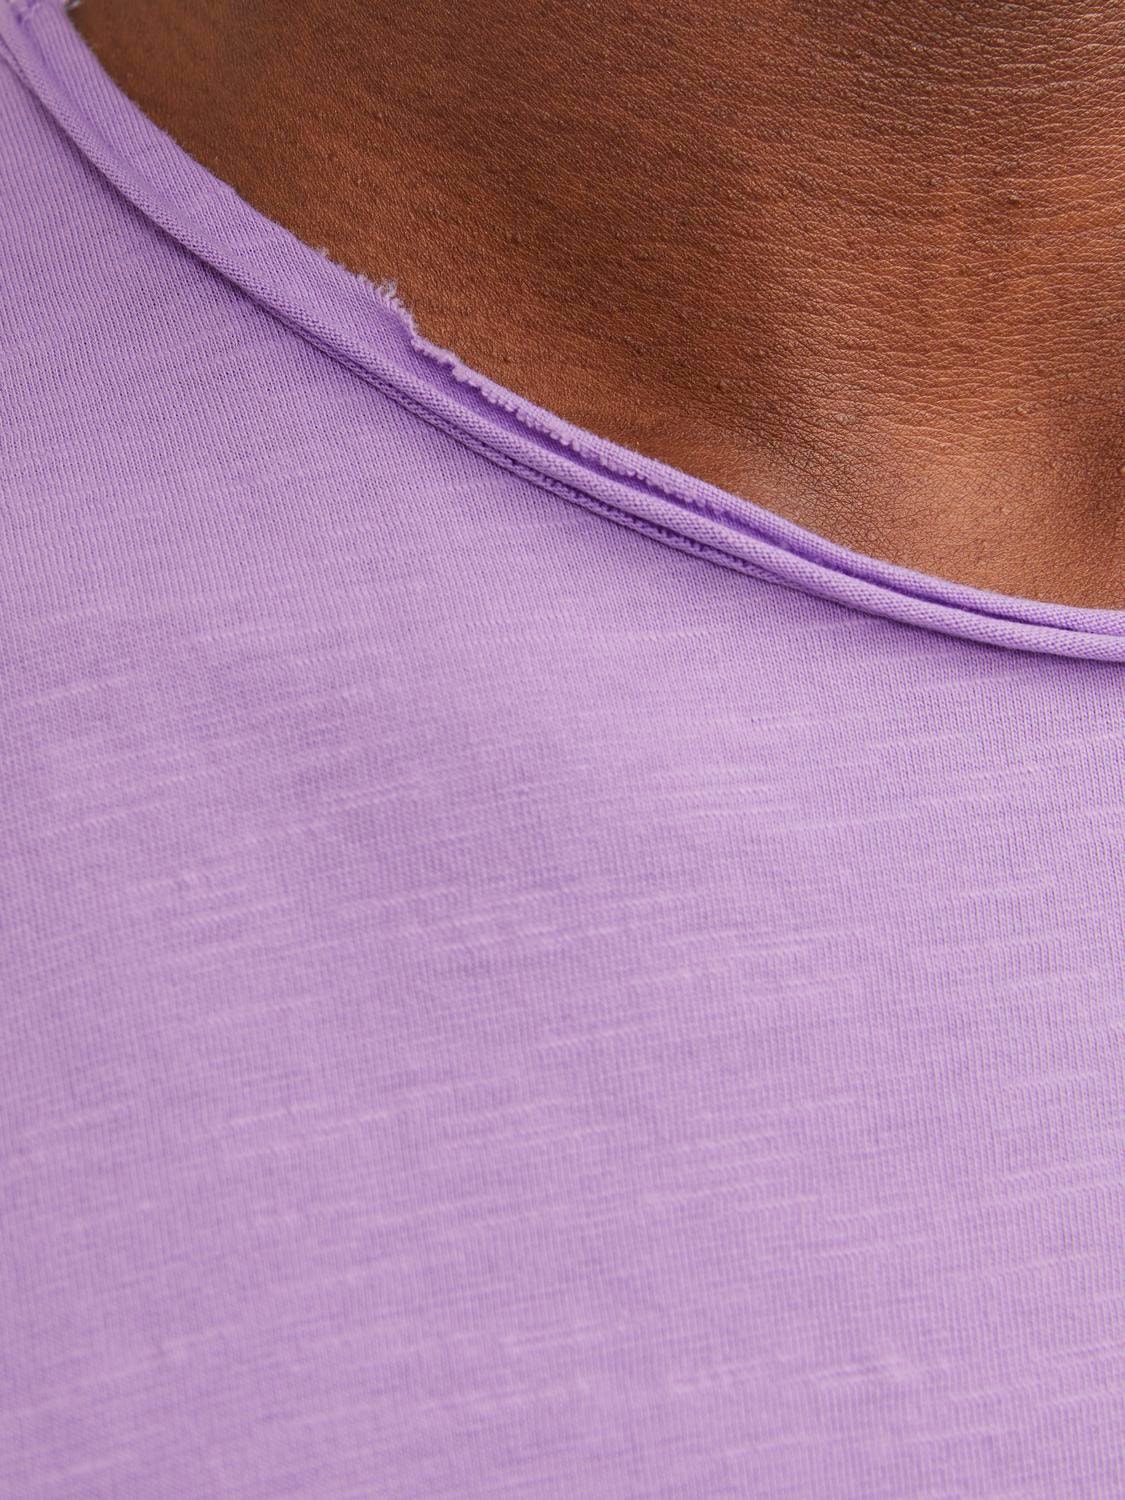 Jack & Jones Plain Crew neck T-shirt -Purple Rose - 12182498